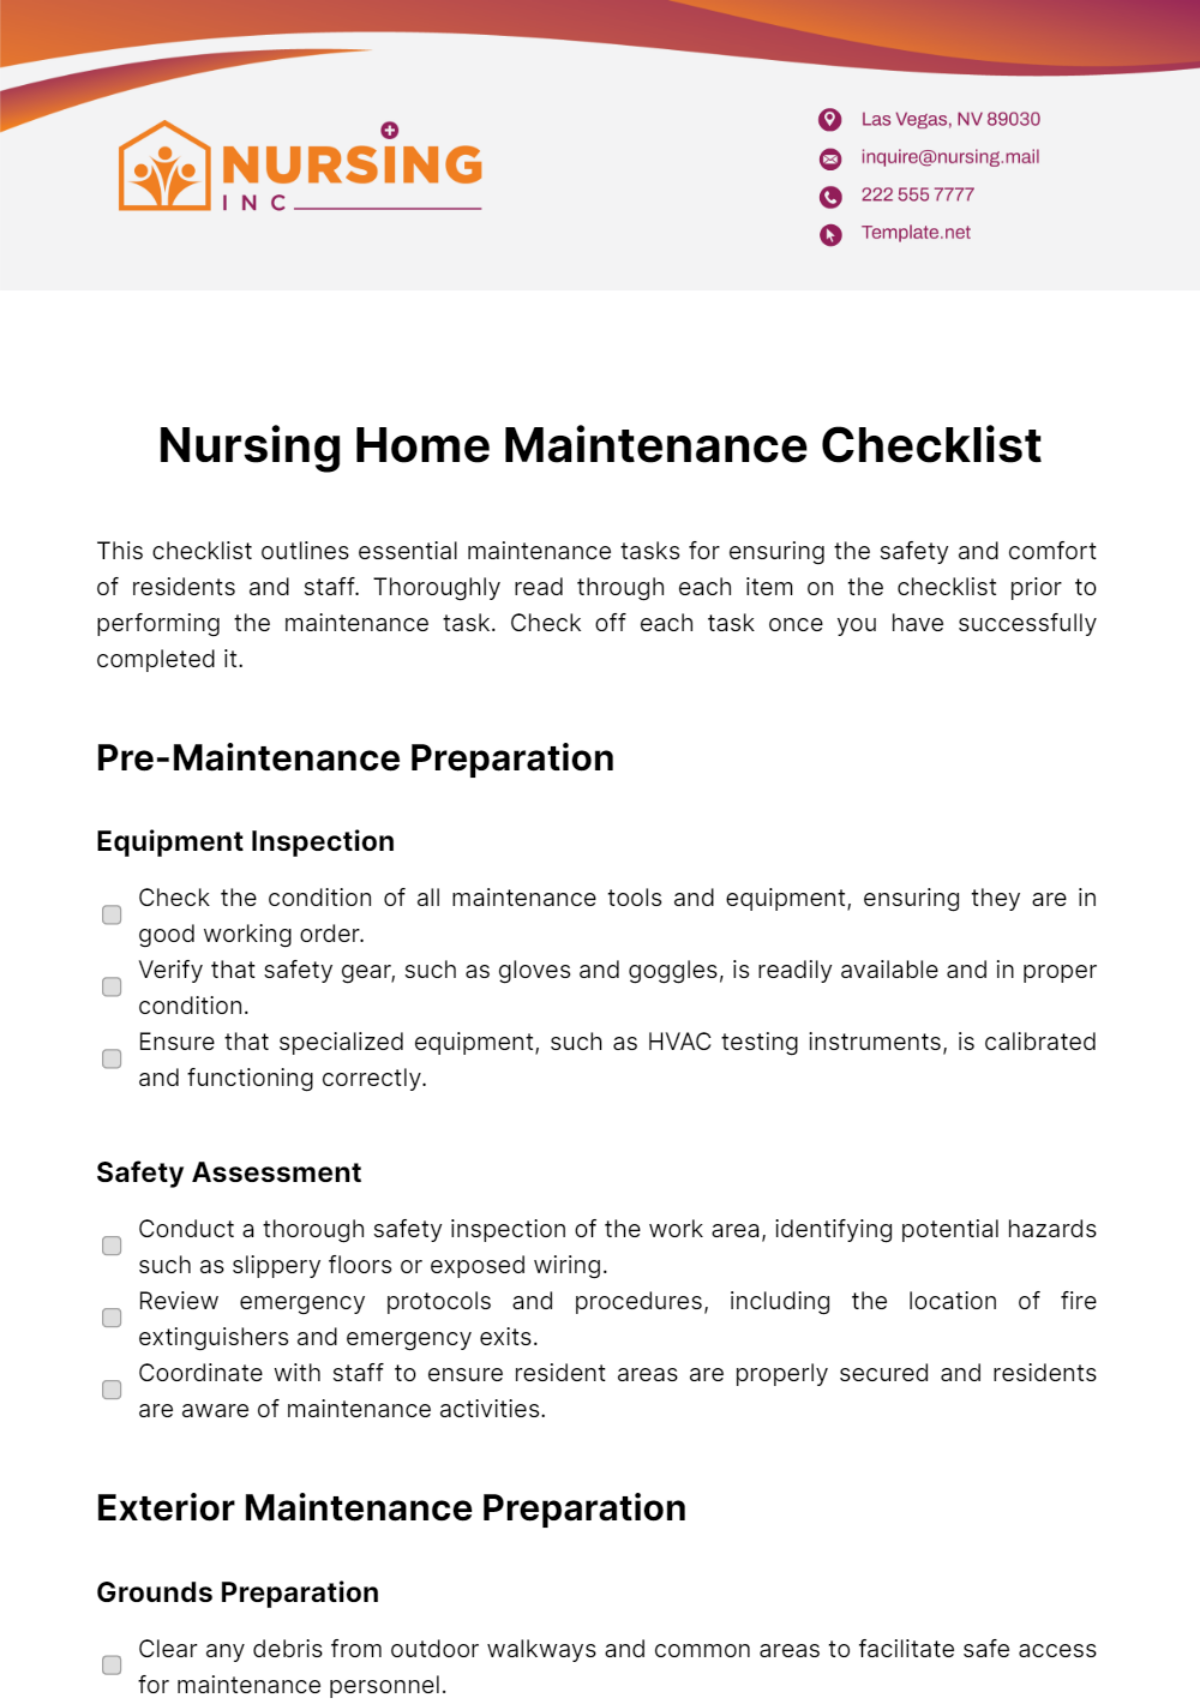 Nursing Home Maintenance Checklist Template